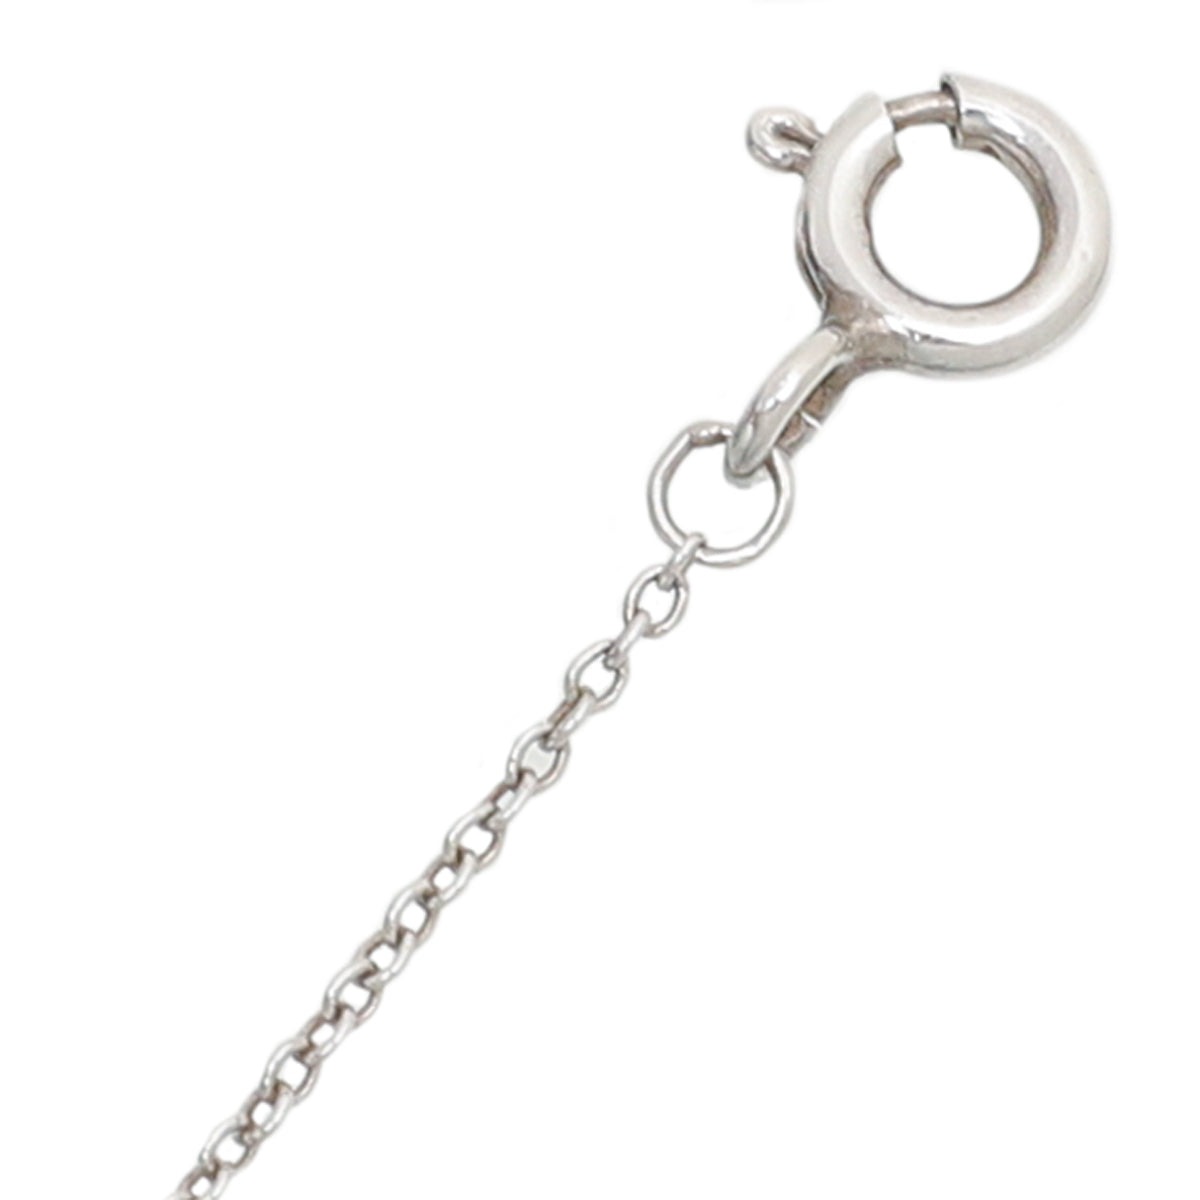 Tiffany & Co Sterling Silver Triple Key Pendant Necklace